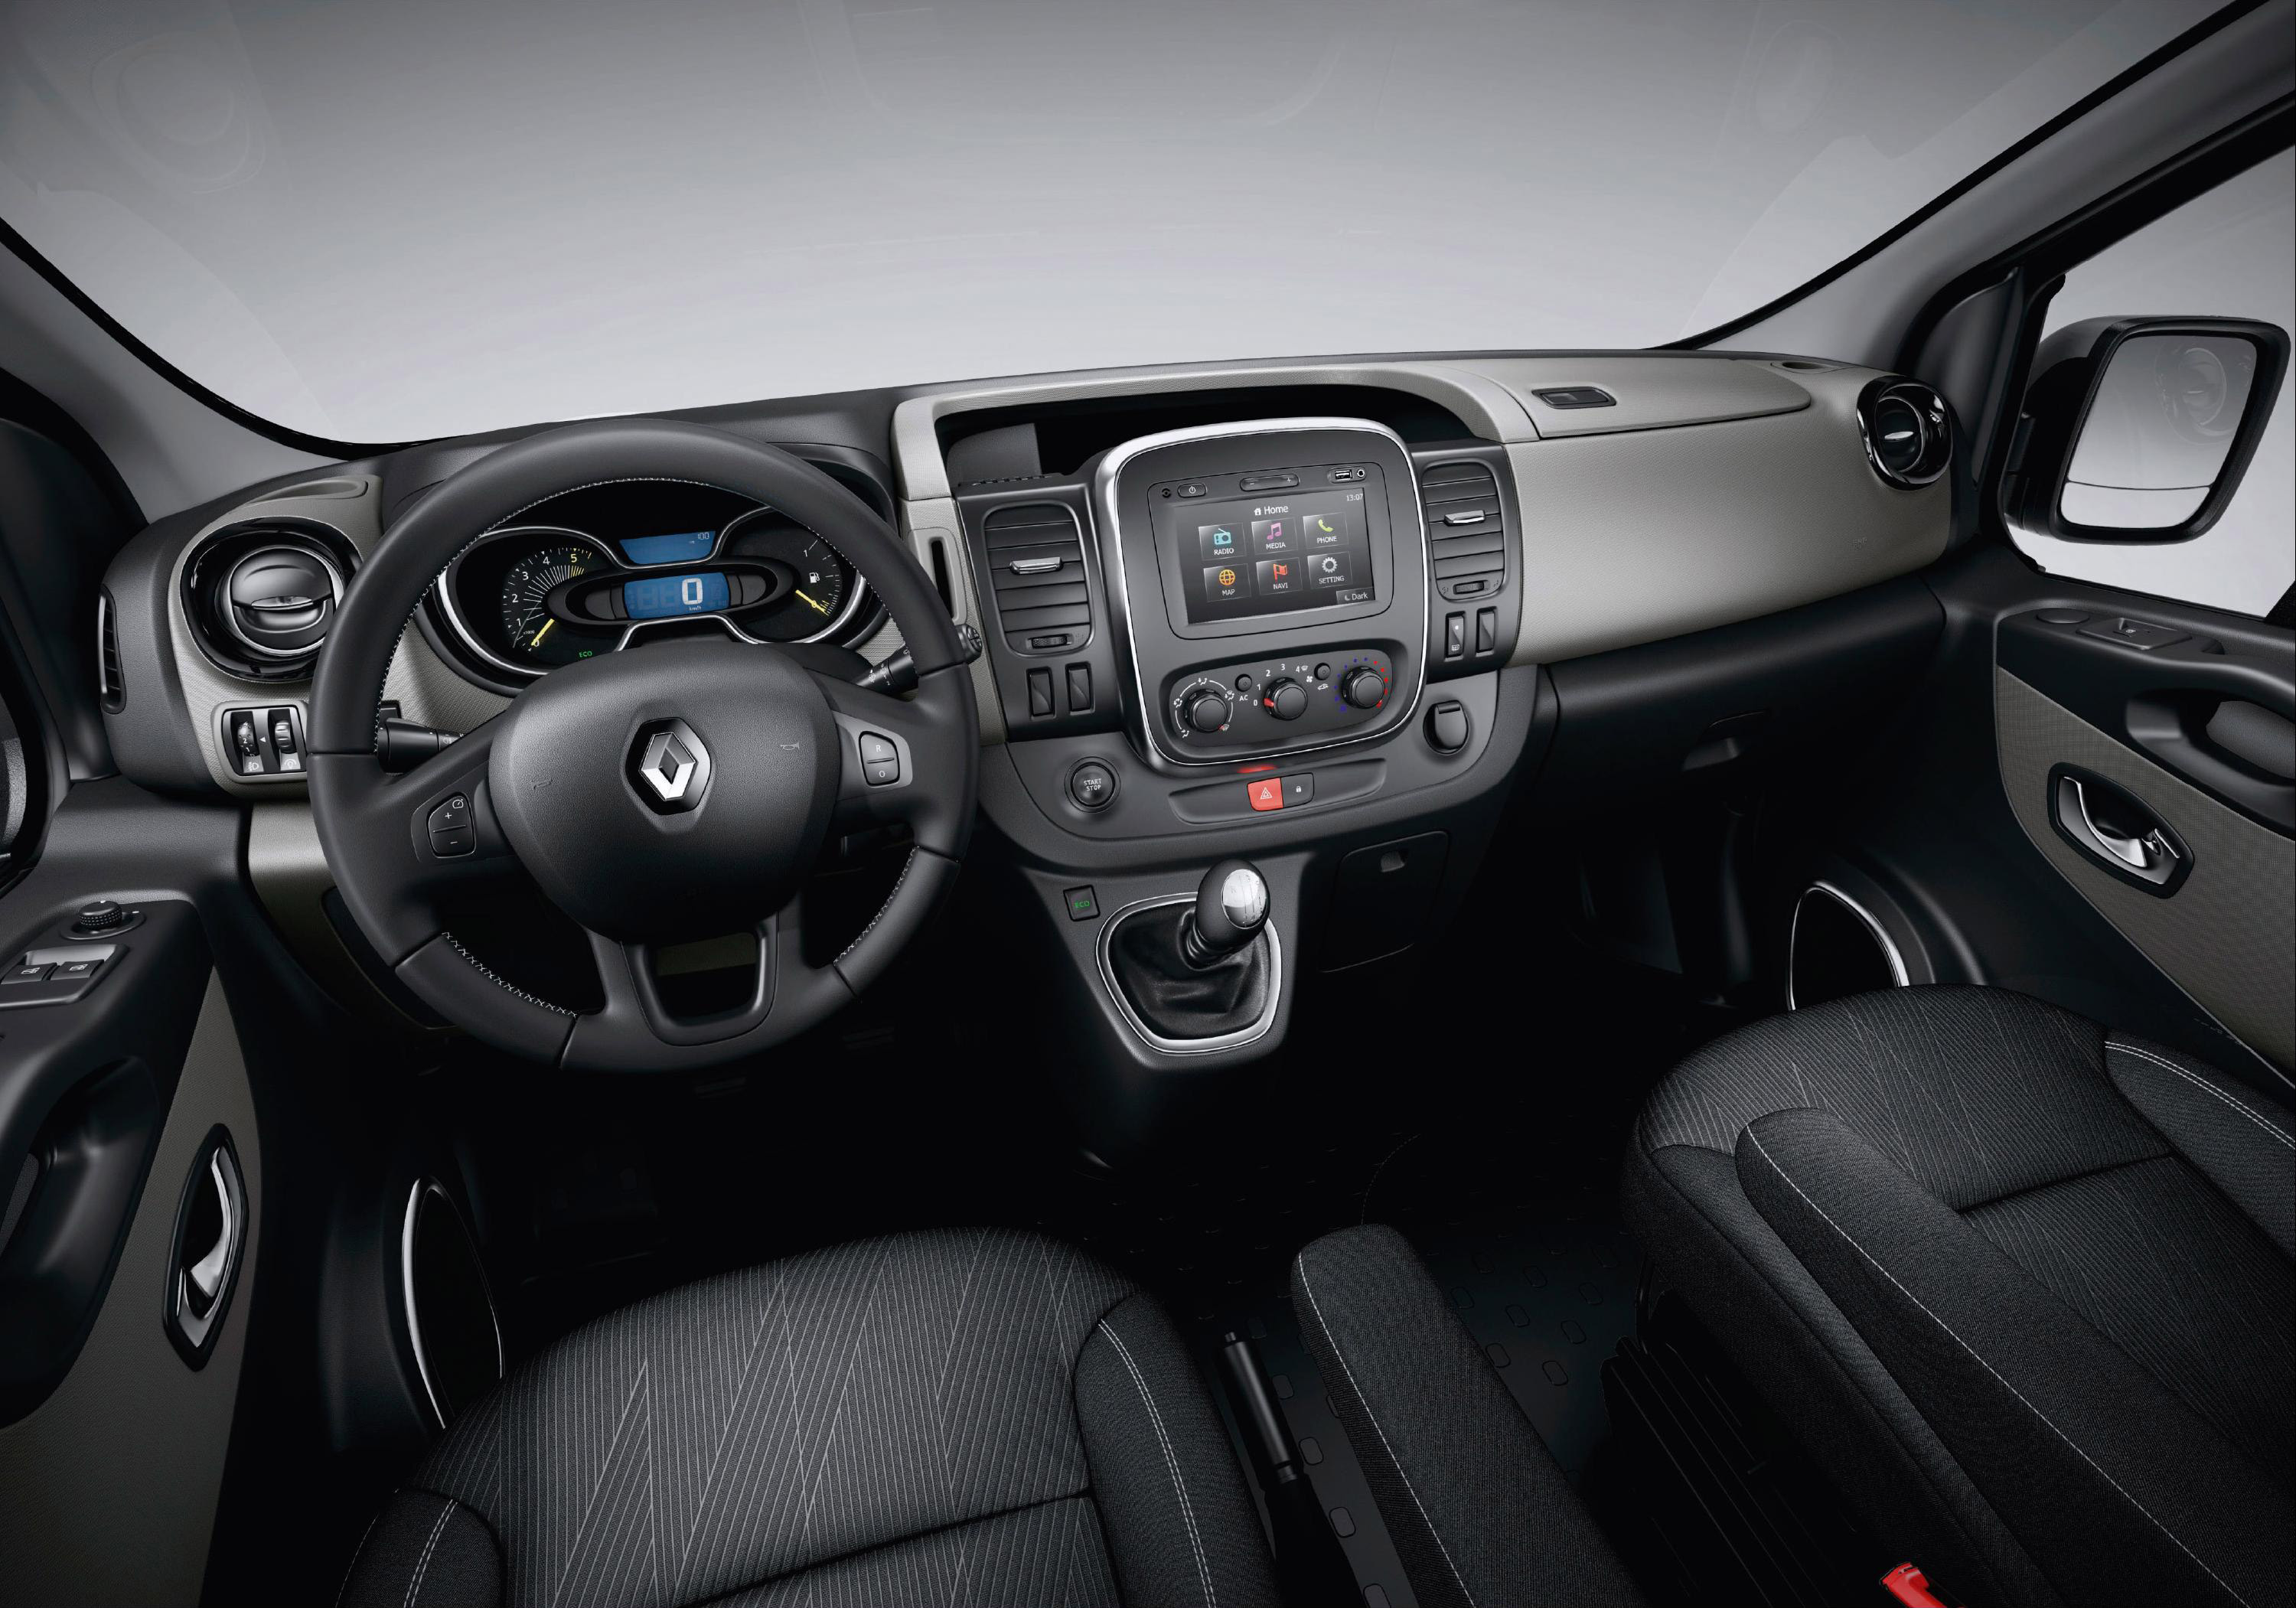 Renault Trafic Combi exterior specifications